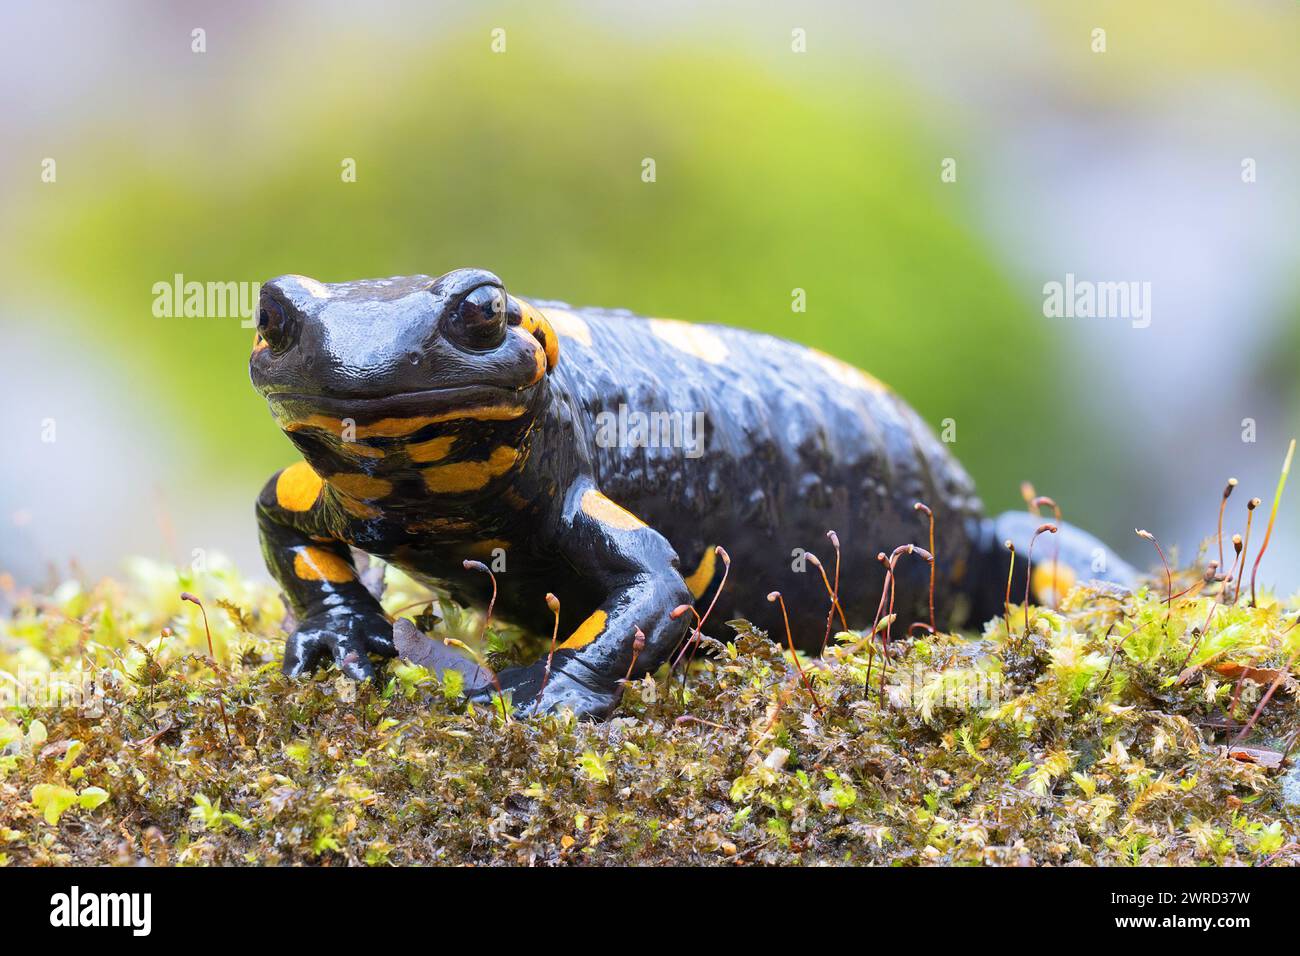 fire salamander in natural habitat, curious animal looking at the camera (Salamandra salamandra) Stock Photo